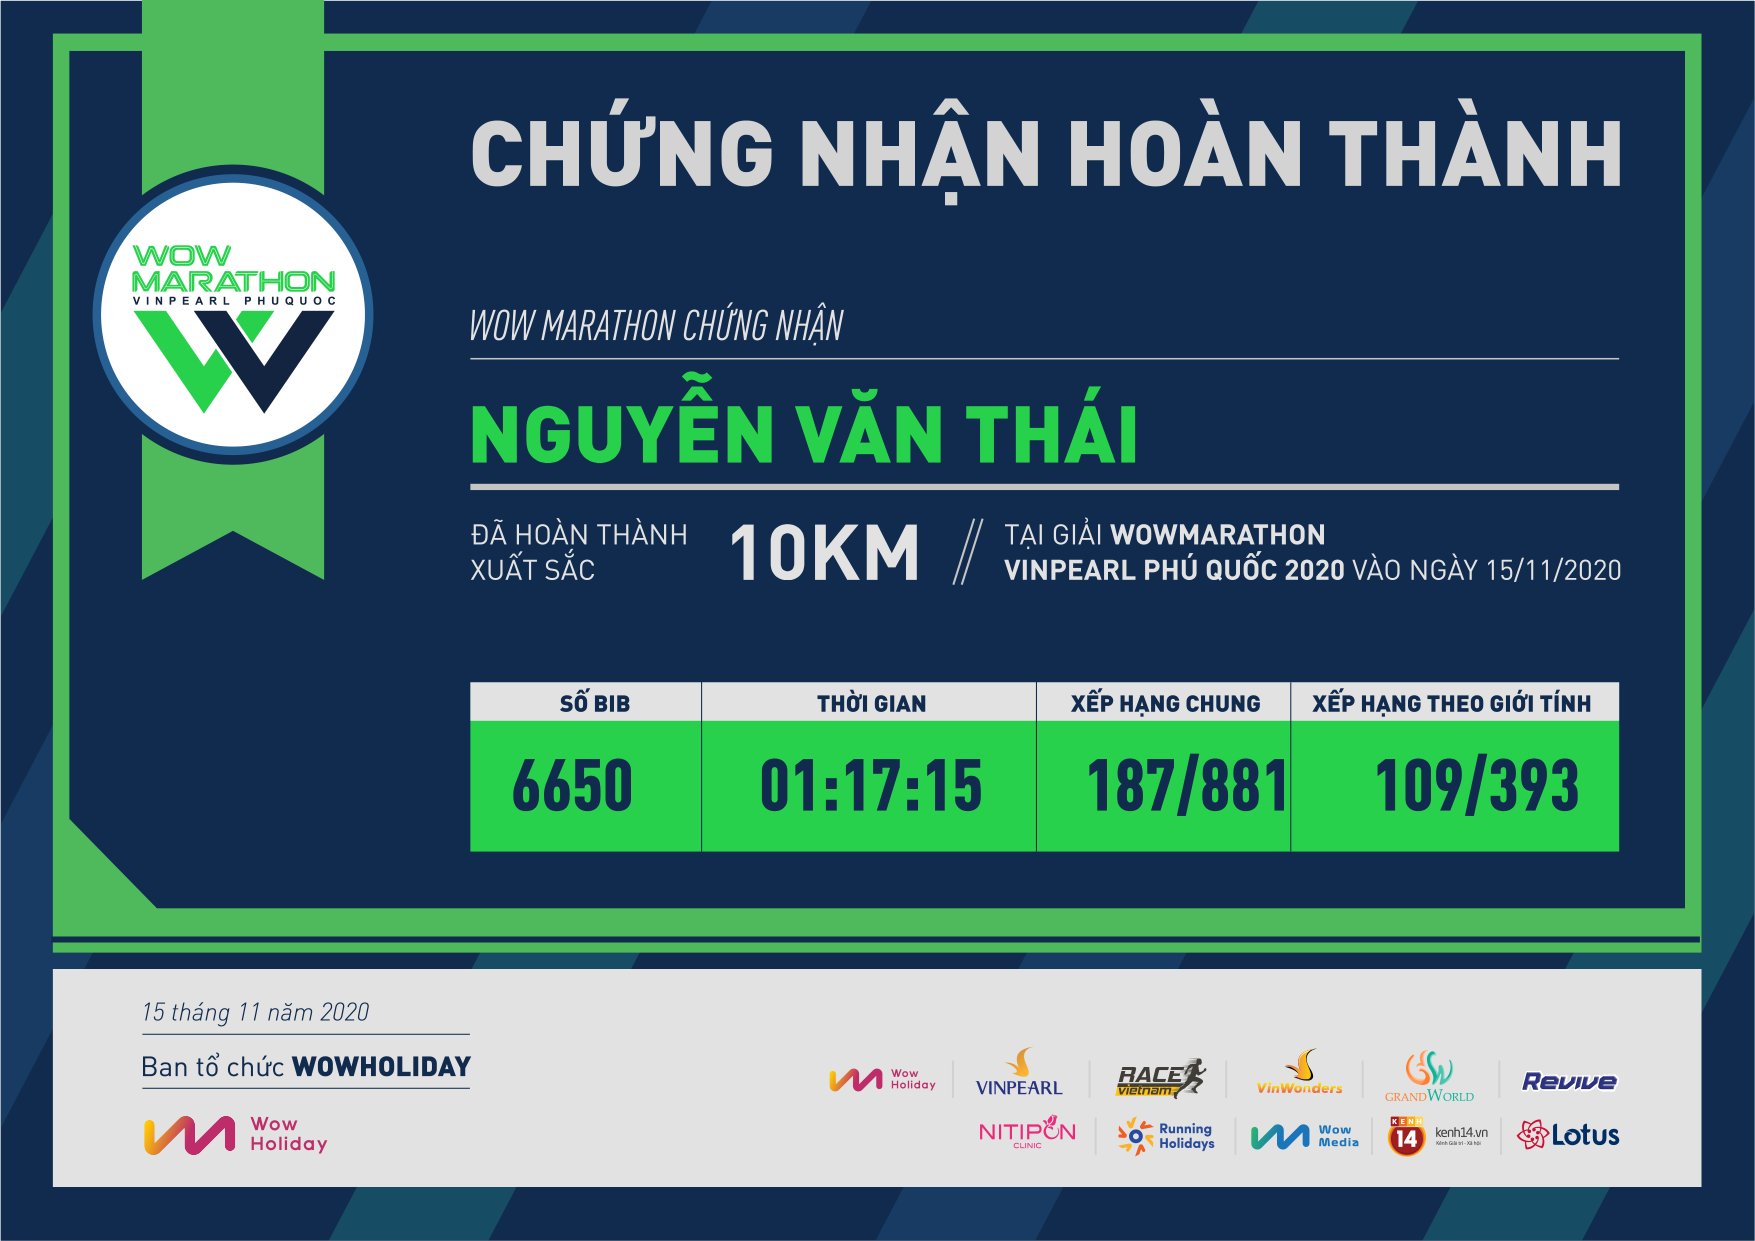 6650 - Nguyễn Văn Thái